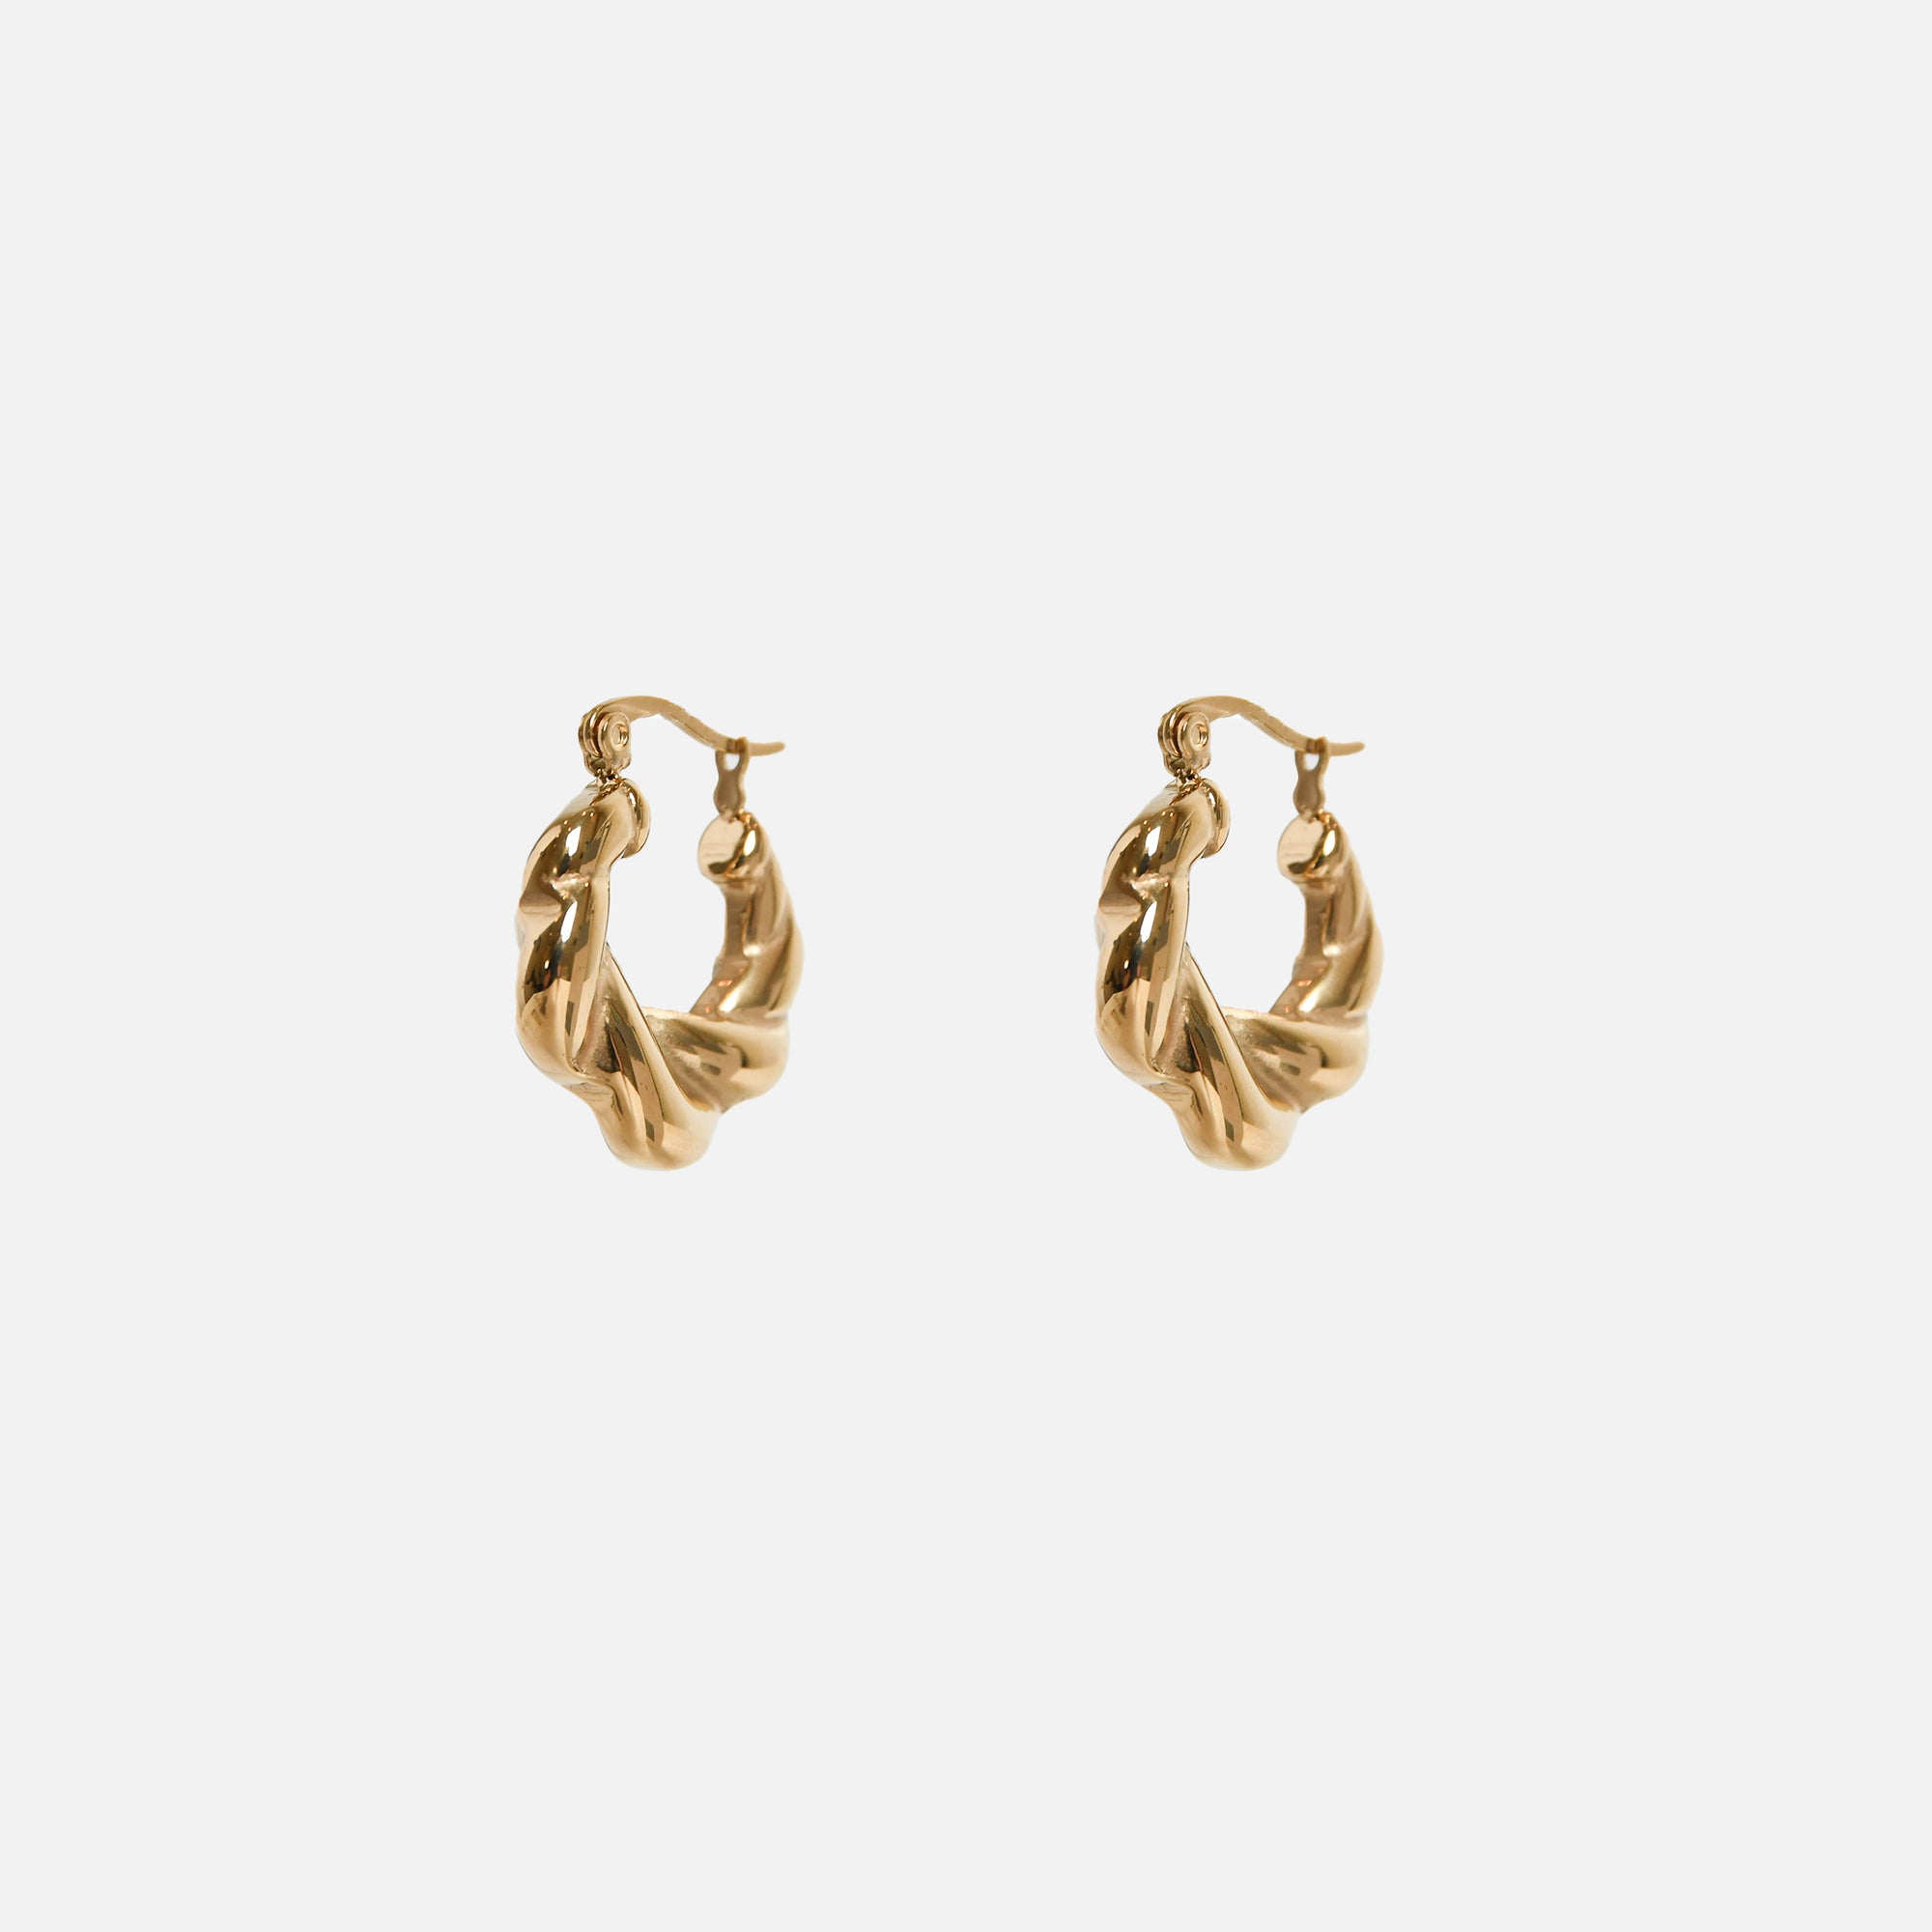 Stainless steel twisted golden hoop earrings